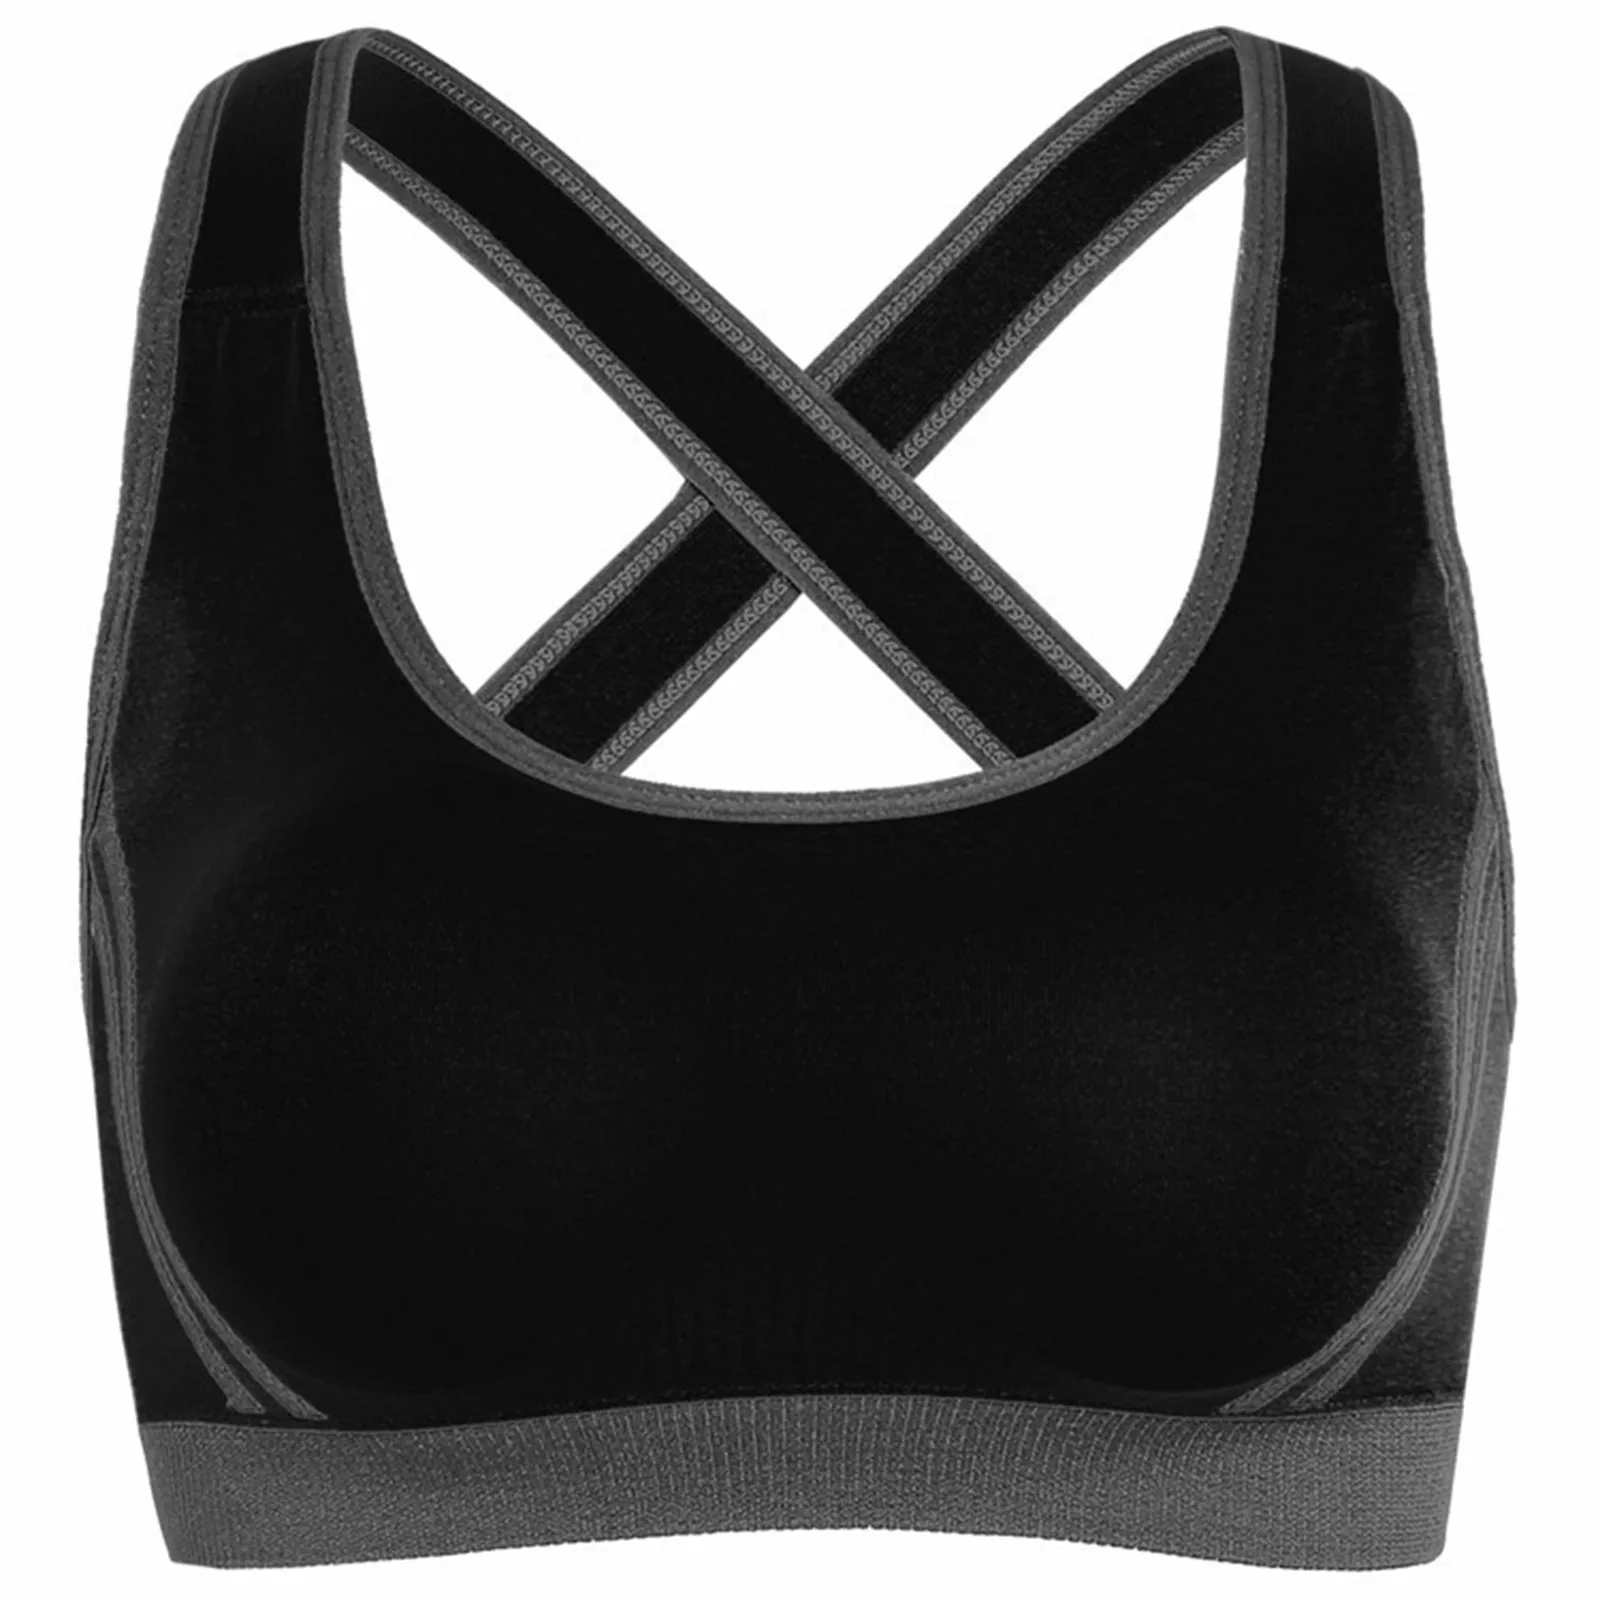 ring running Women's no bra adjustment back steel Yoga - AliExpress